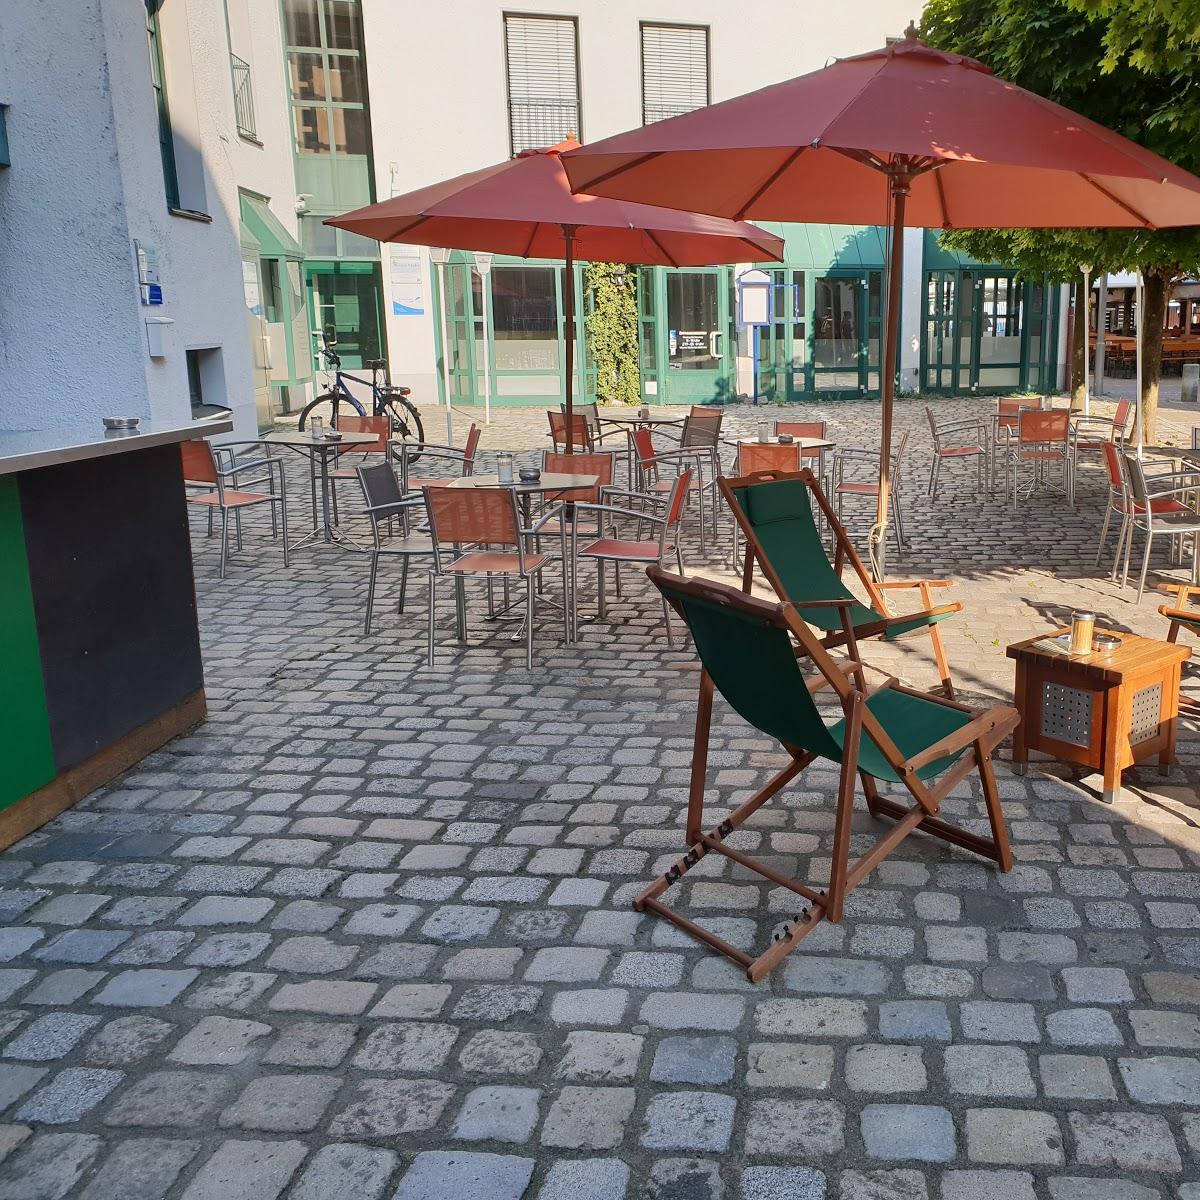 Restaurant "Cafe-Bar Ozon" in Neuburg an der Donau